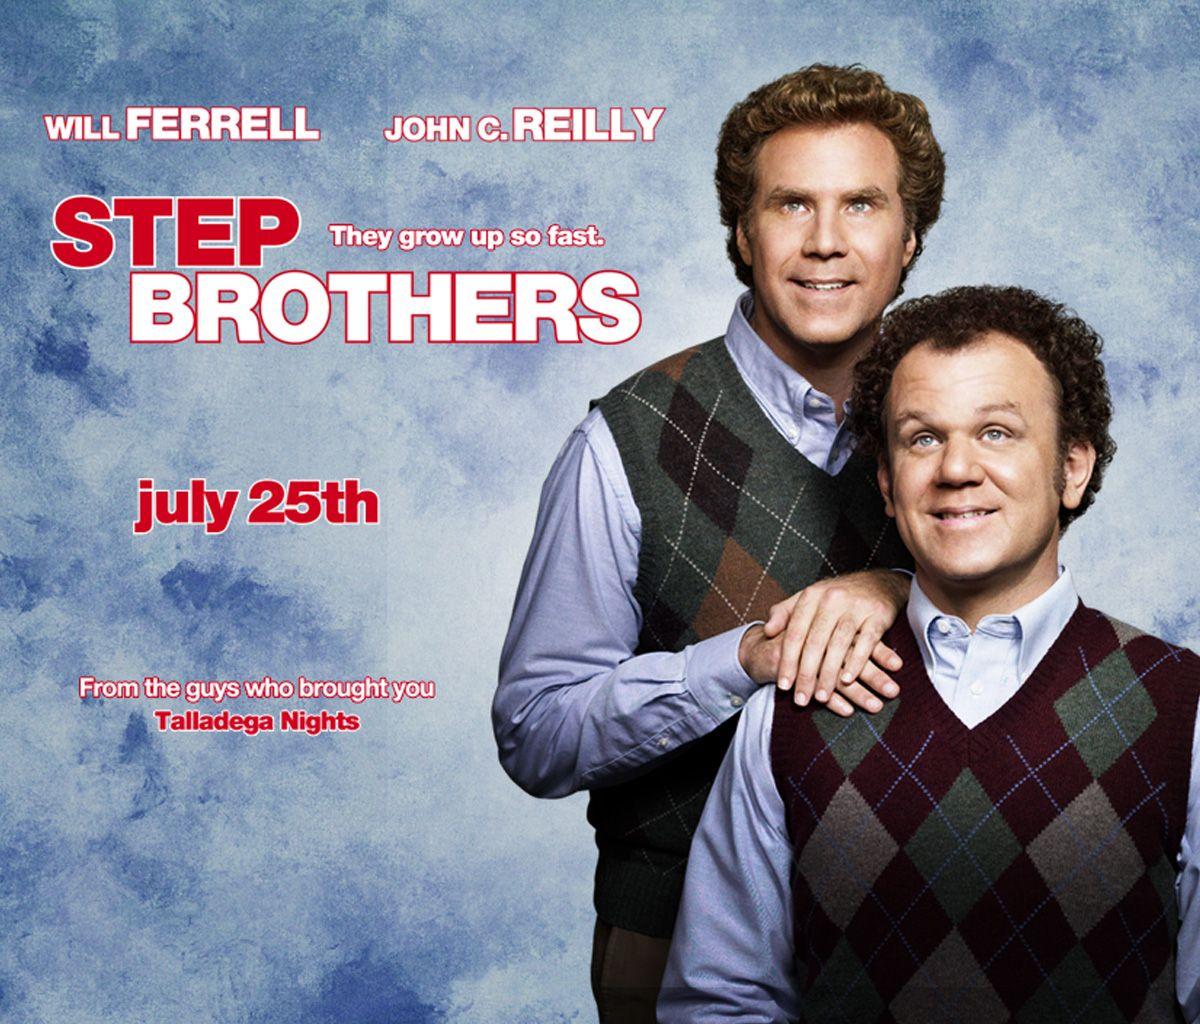 Will Ferrell Ferrell in Step Brothers Wallpaper 11